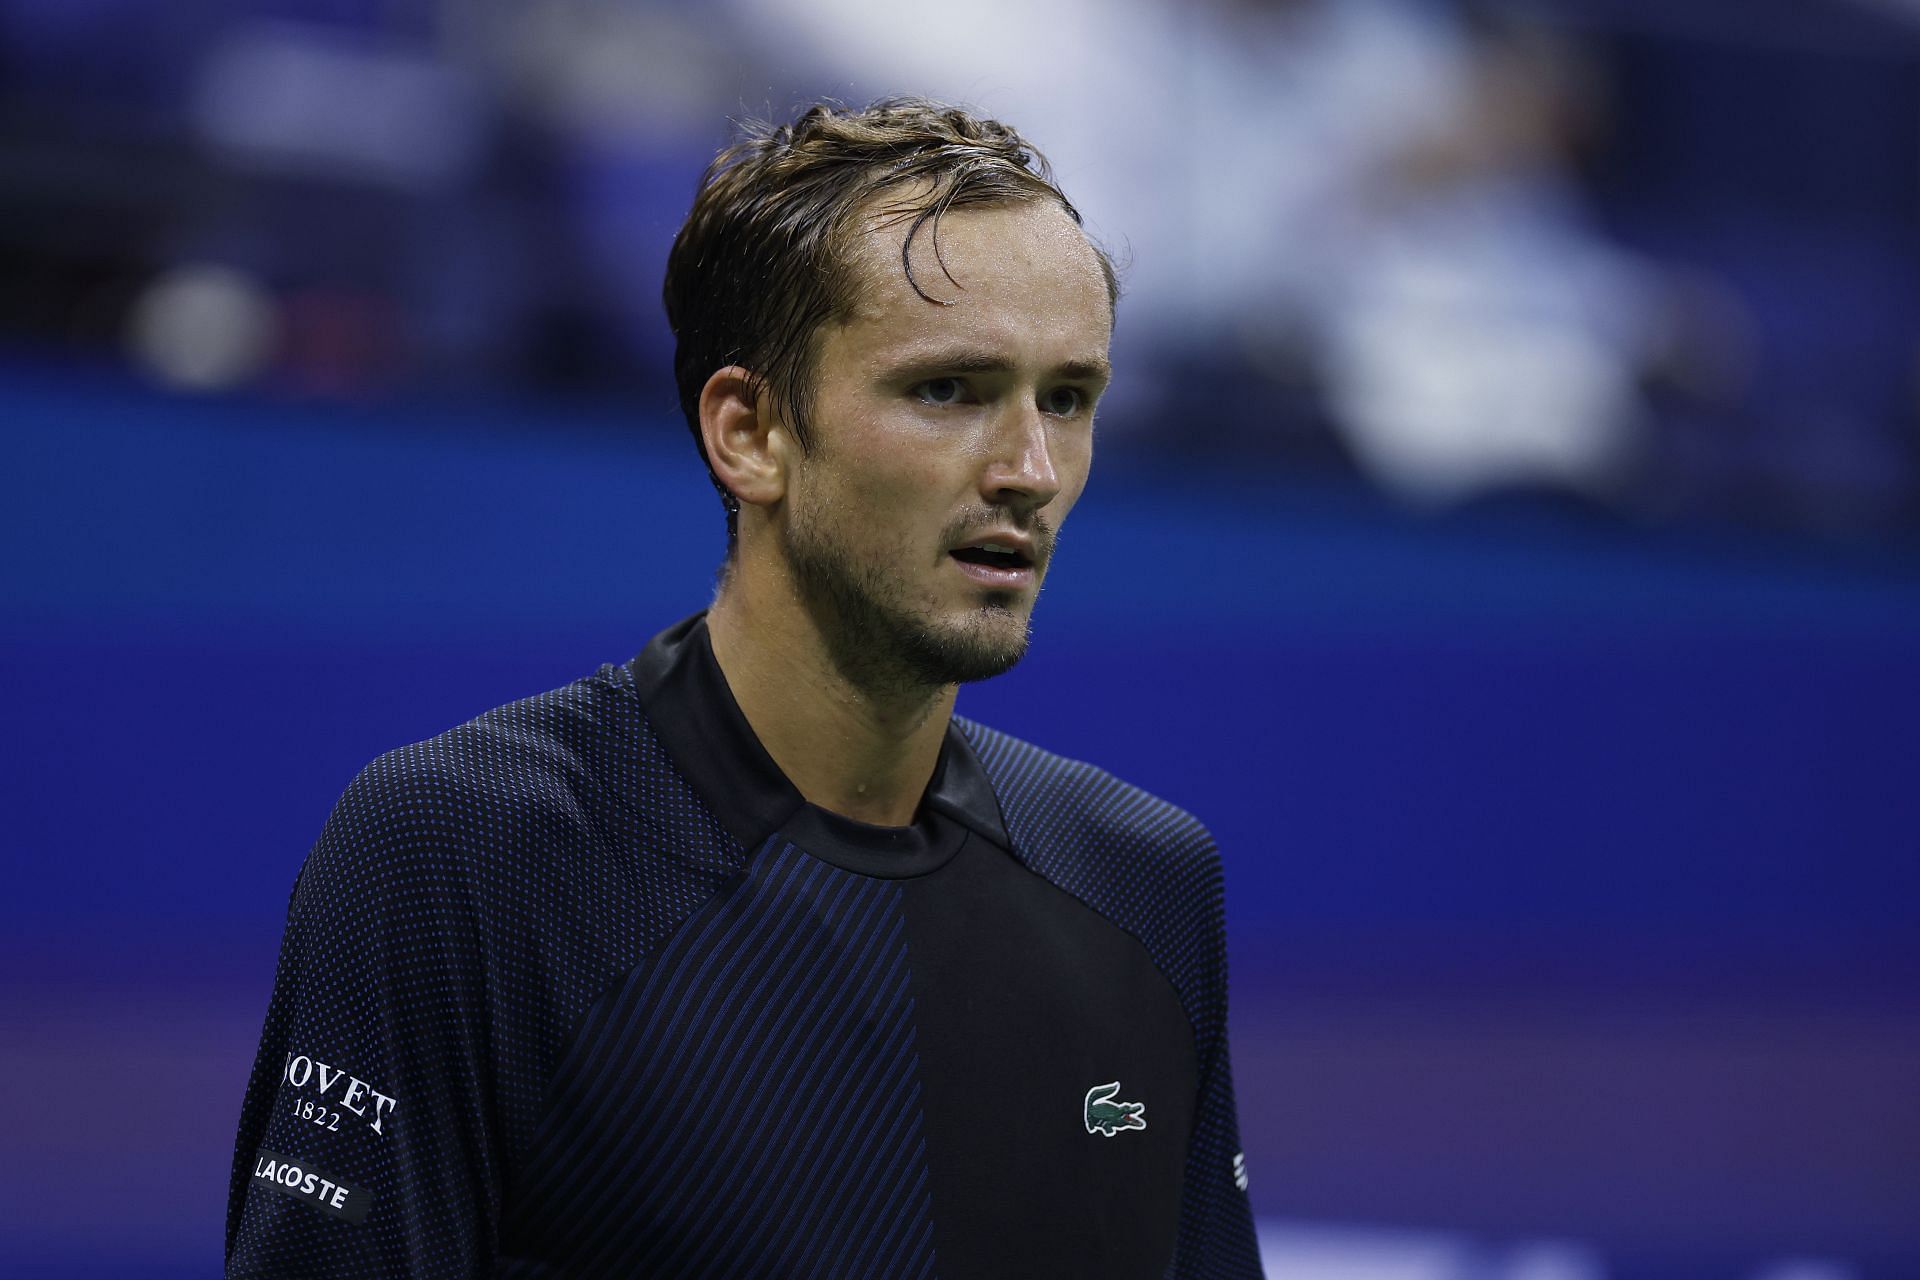 Jannik Sinner upsets Daniil Medvedev at the Erste Bank Open in